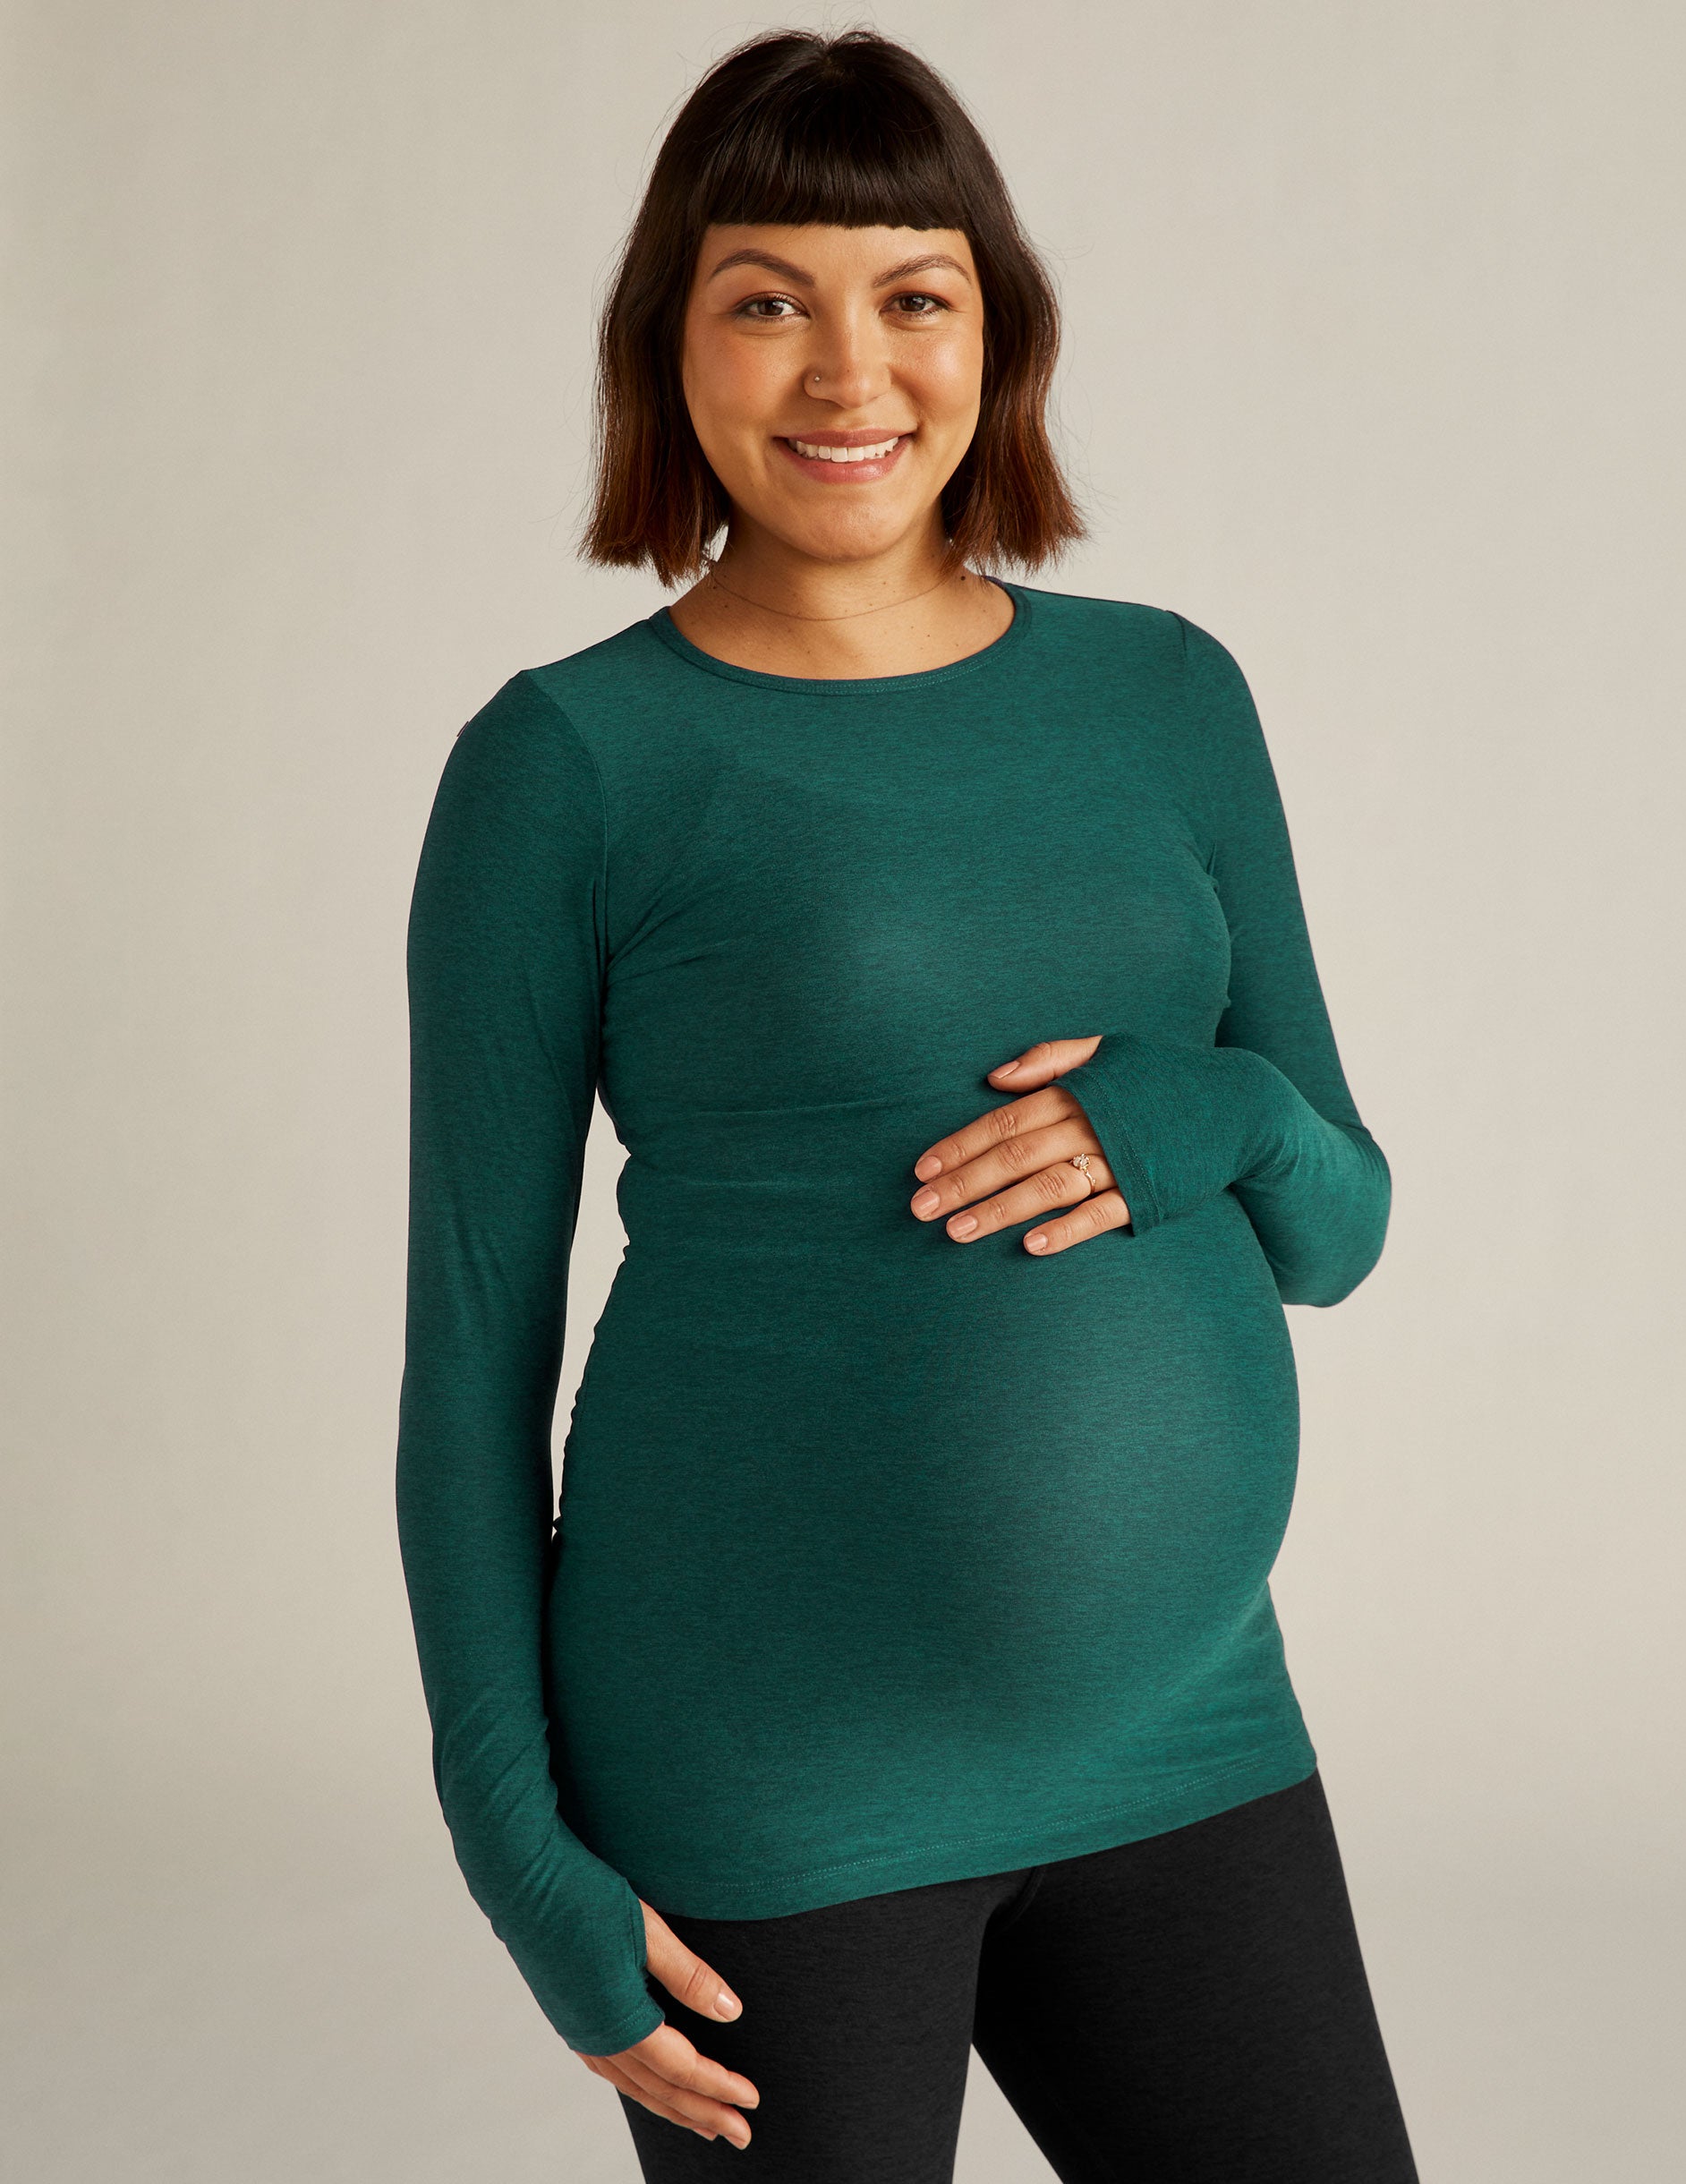 green maternity long sleeve pullover shirt.